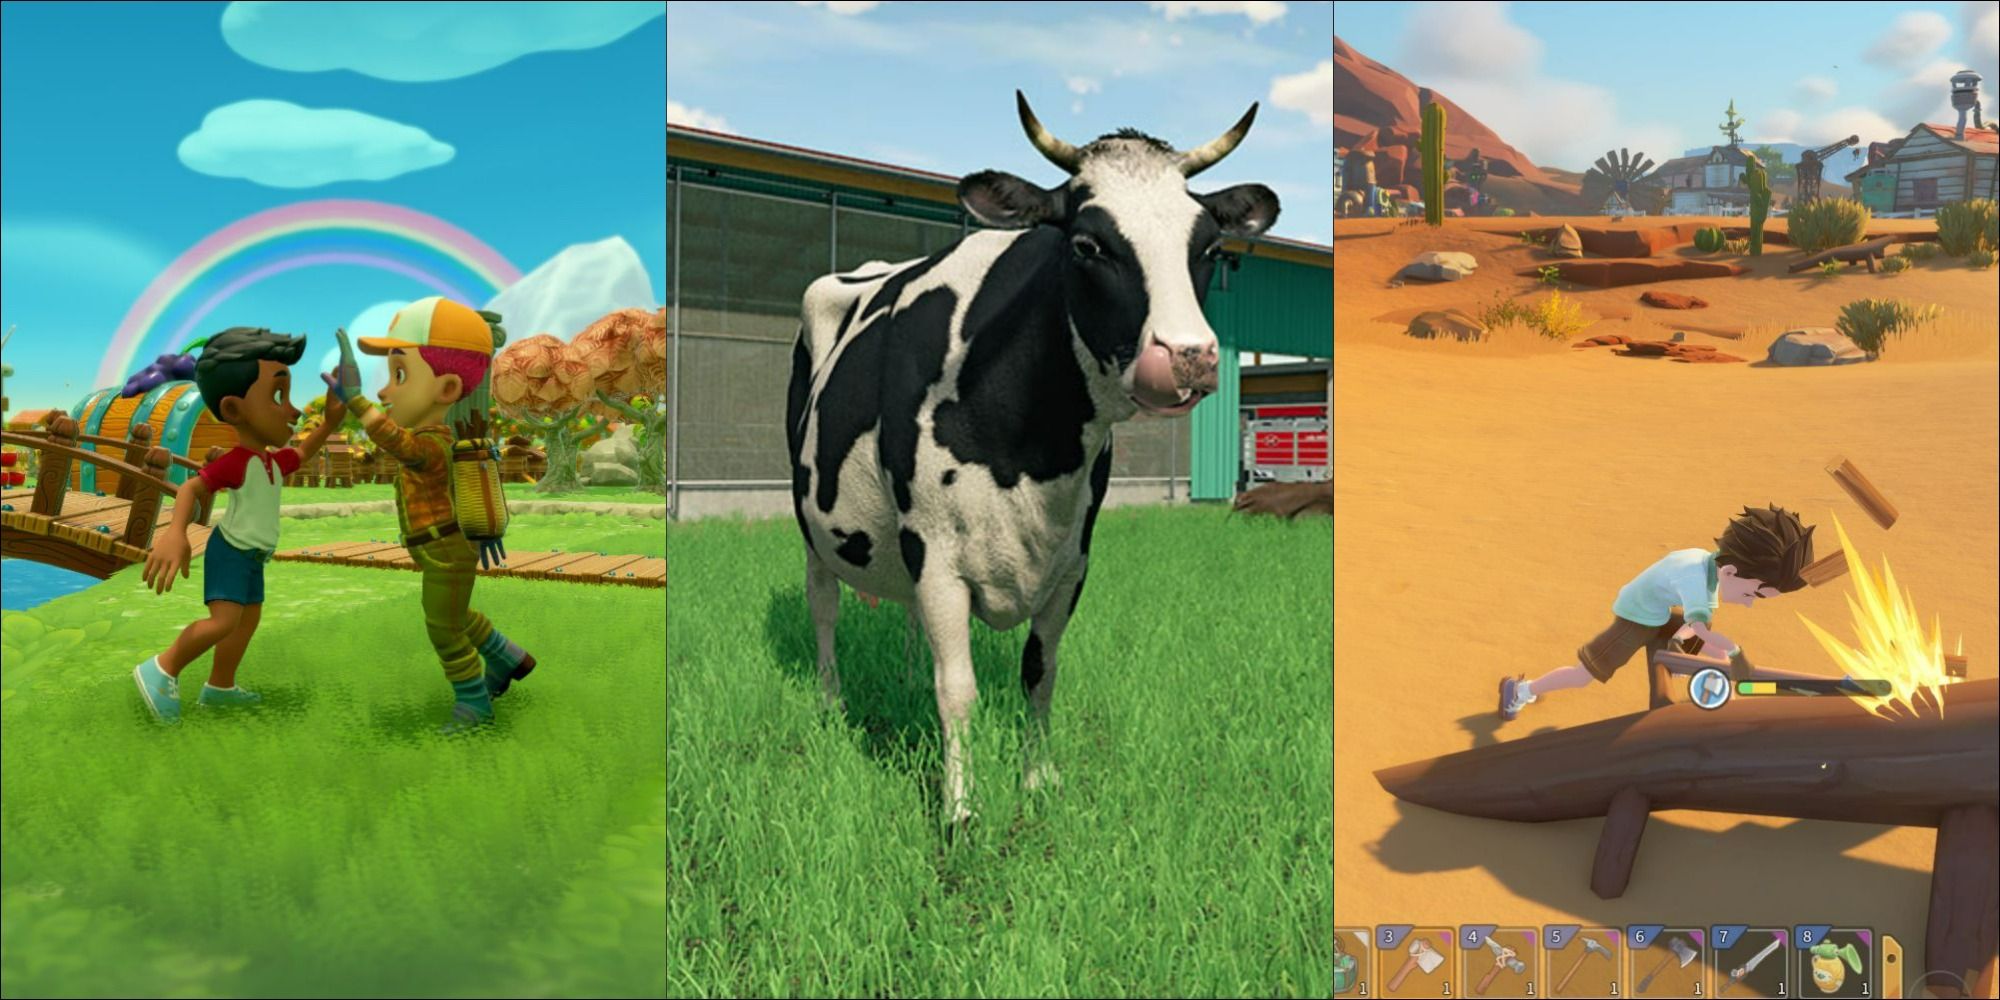 Farming Simulators - Farm Together, Farming Simulator 22, and My Time at Sandrock